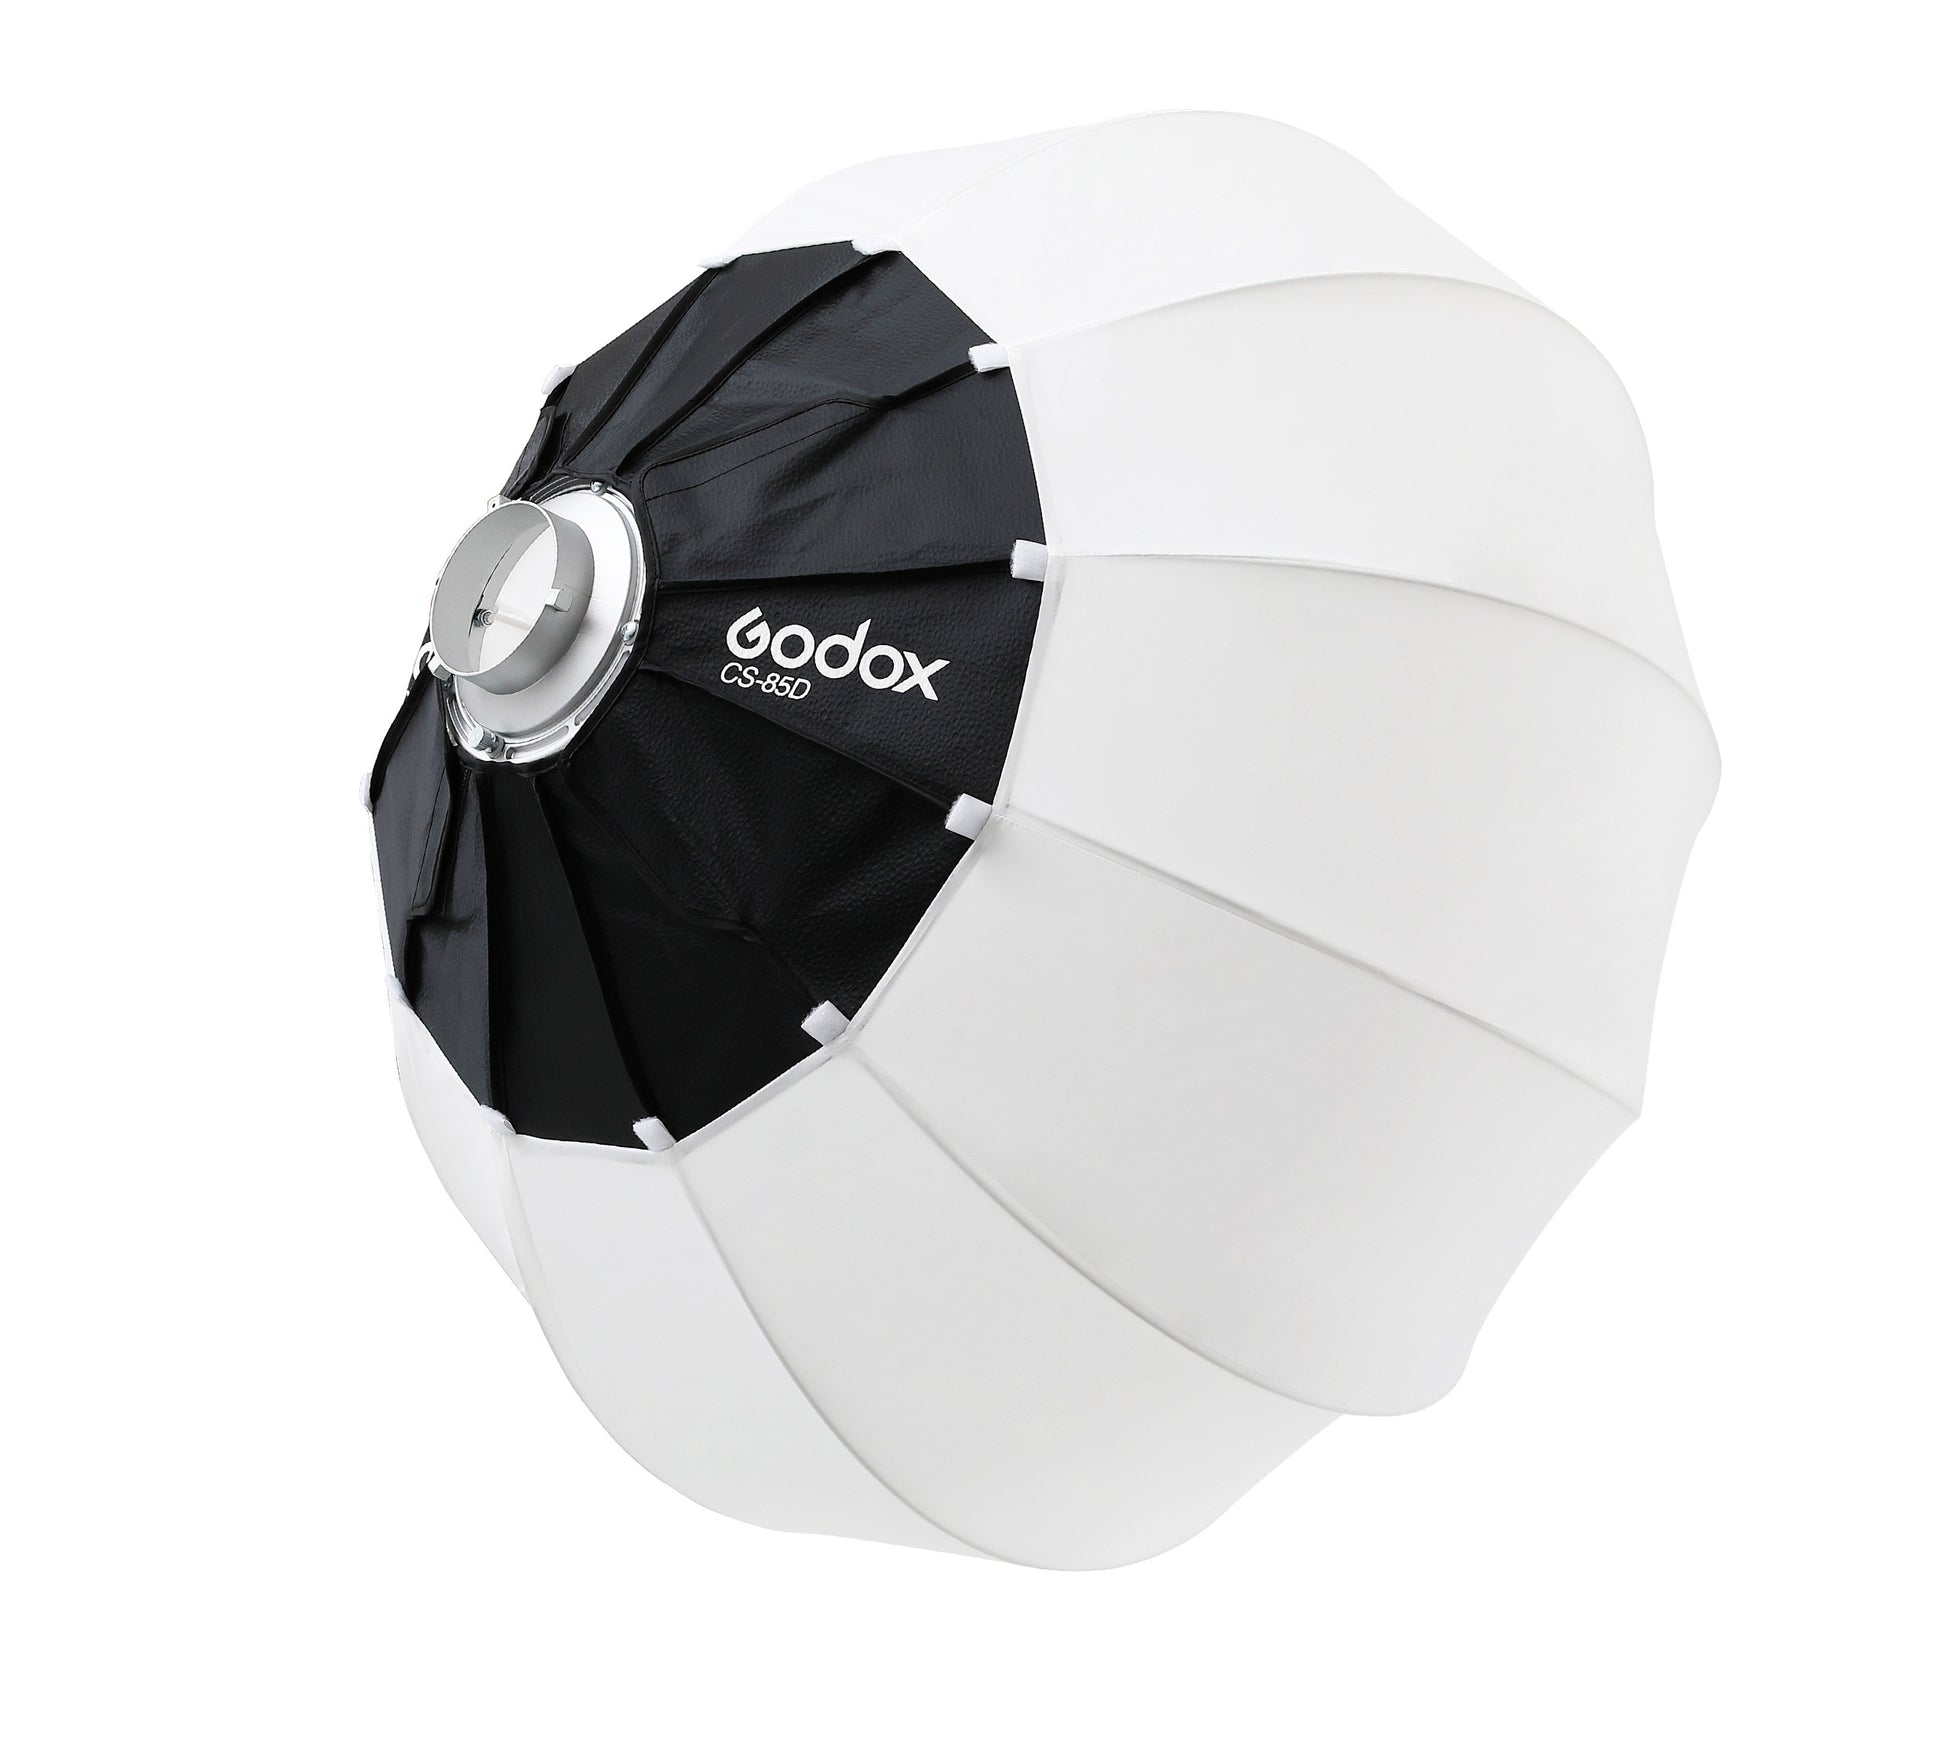 Godox CS-85D Lantern Sofbox Foldable Quick Install Portable Round Shape Softbox Light for Bowens Mount Studio Flash